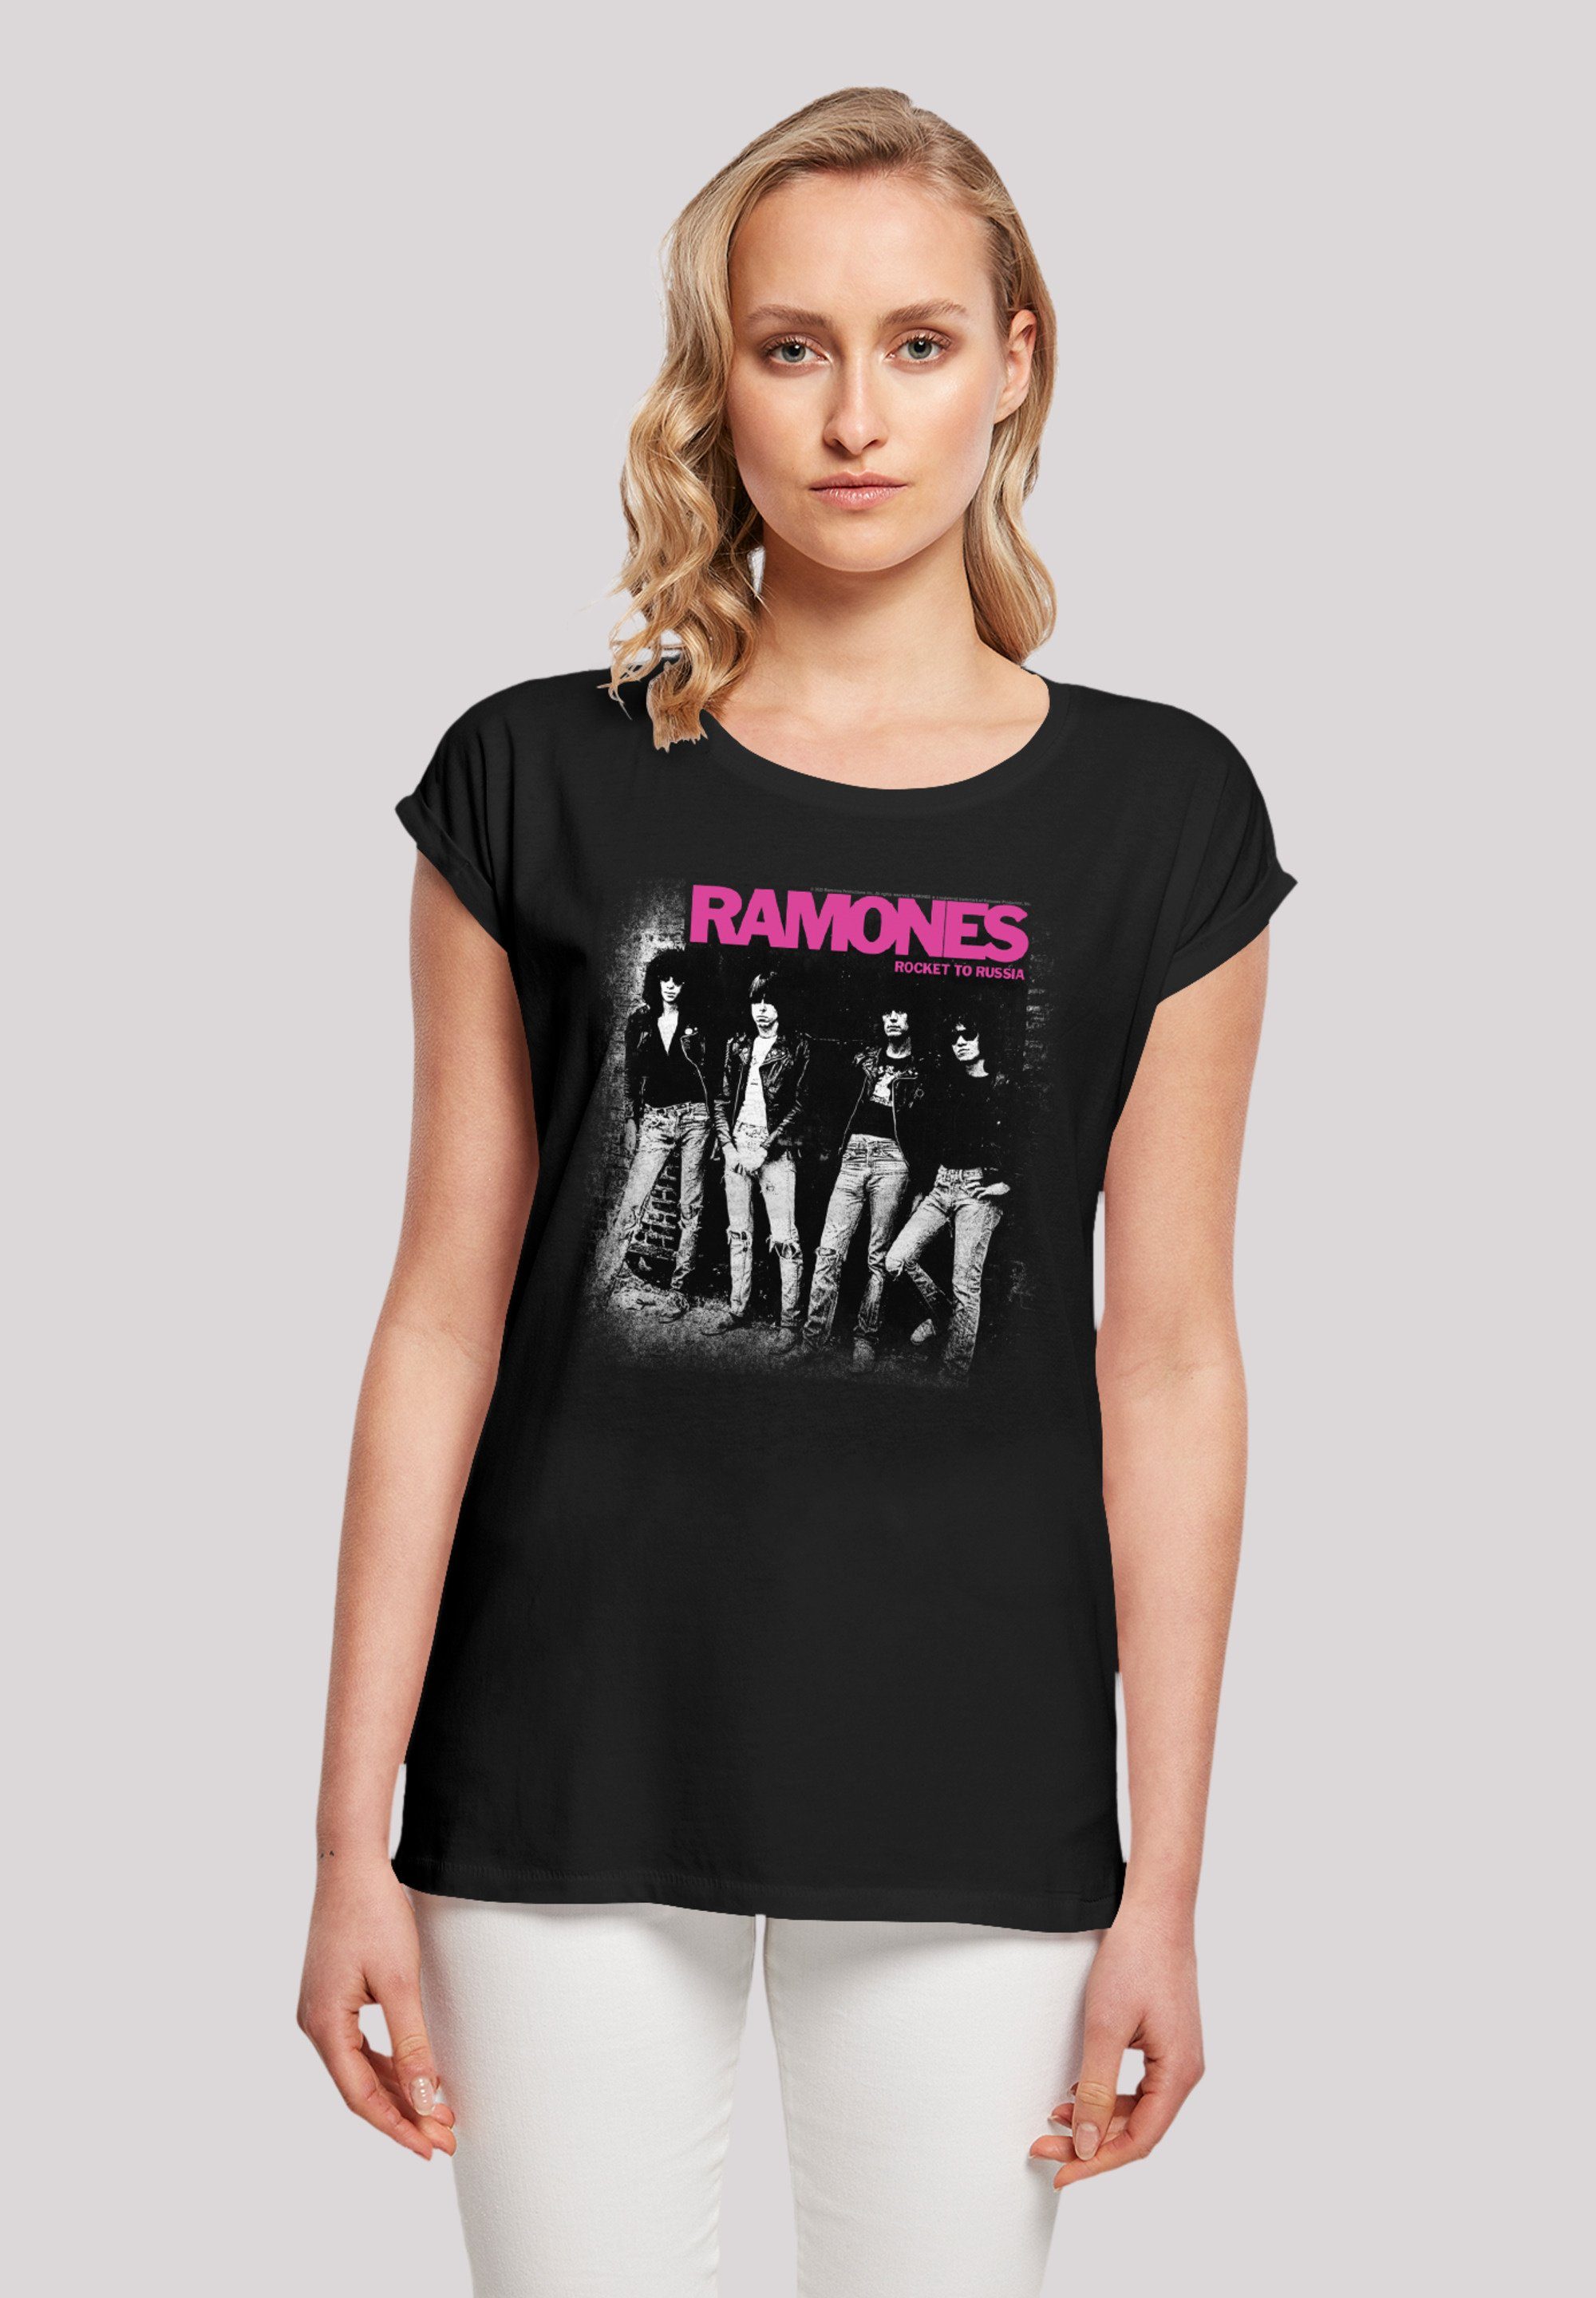 F4NT4STIC T-Shirt Ramones Rock Musik Band Rocket To Russia Faded Premium Qualität, Band, Rock-Musik | 